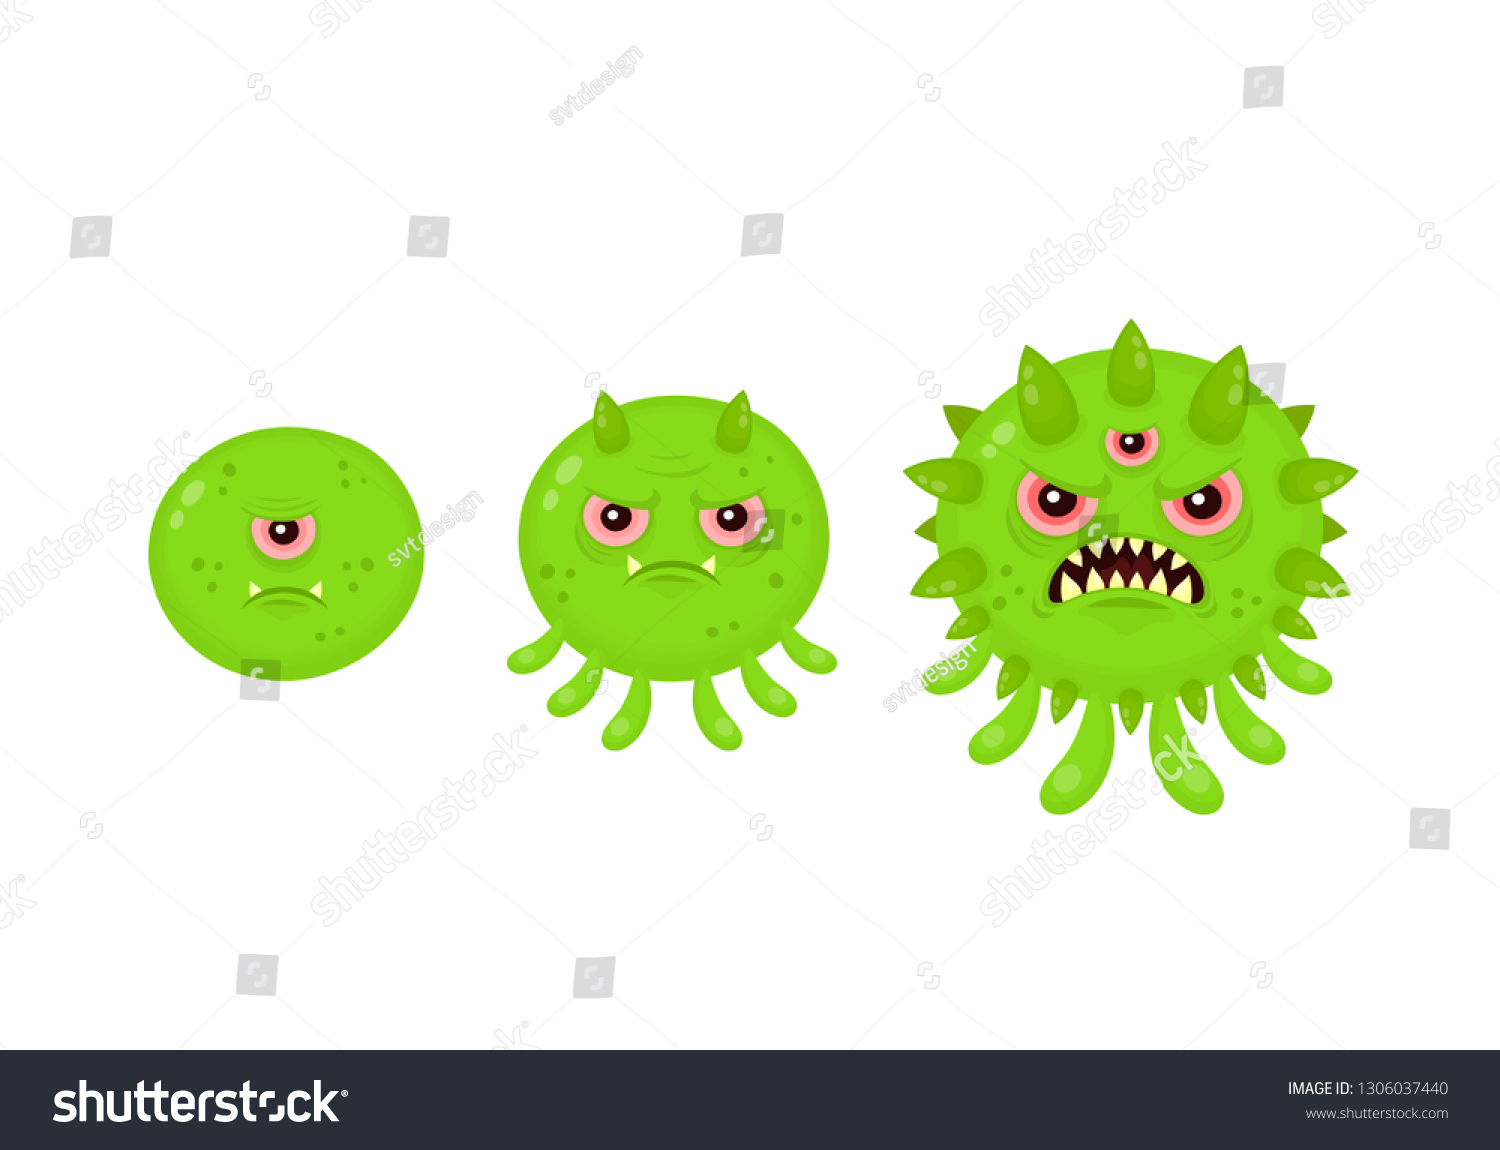 Virus Cartoon Shutterstock - Shutter Stock Image Cost